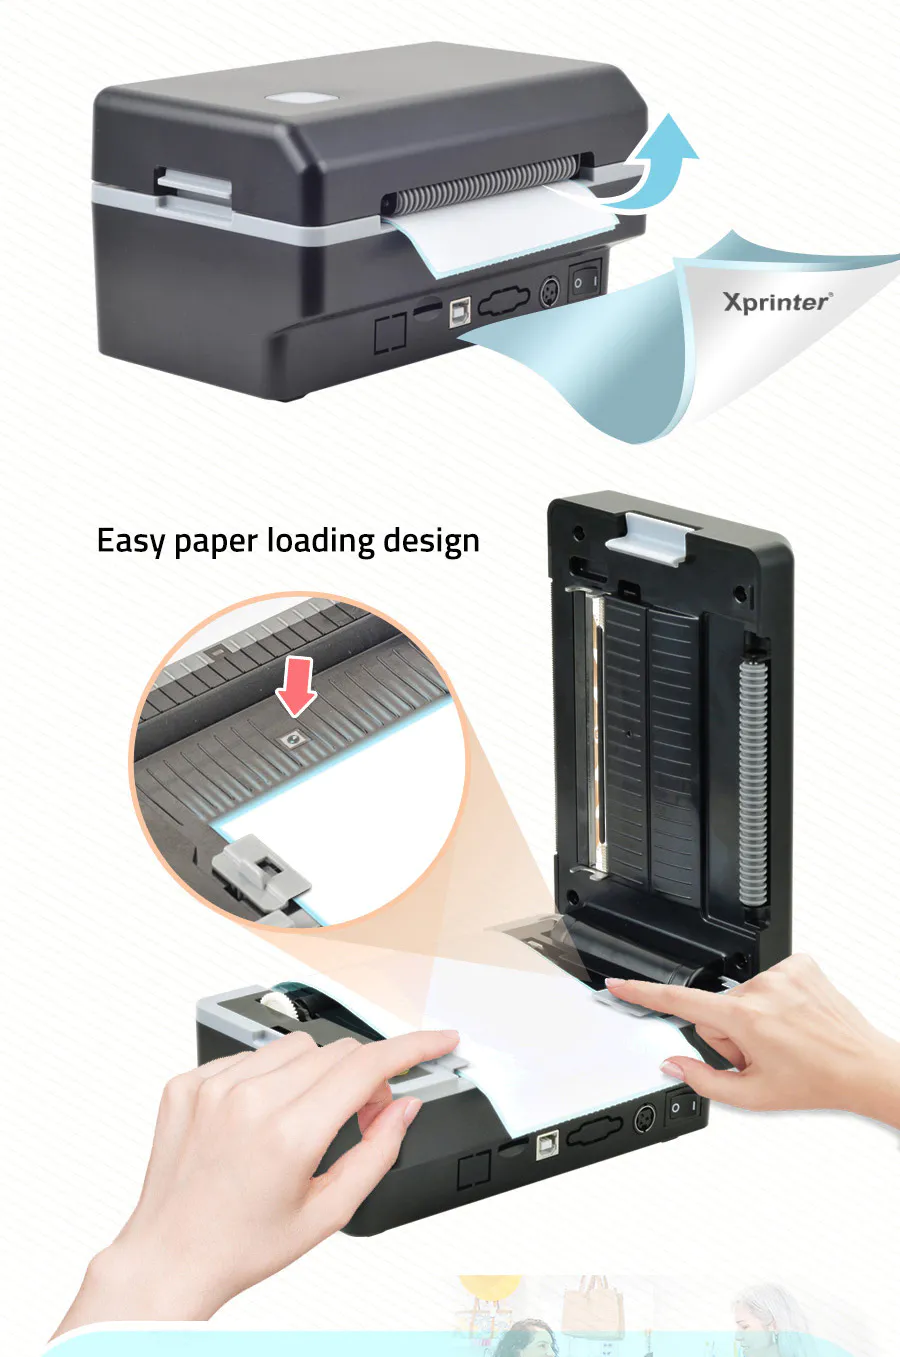 Xprinter monochromatic portable barcode label printer directly sale for shop